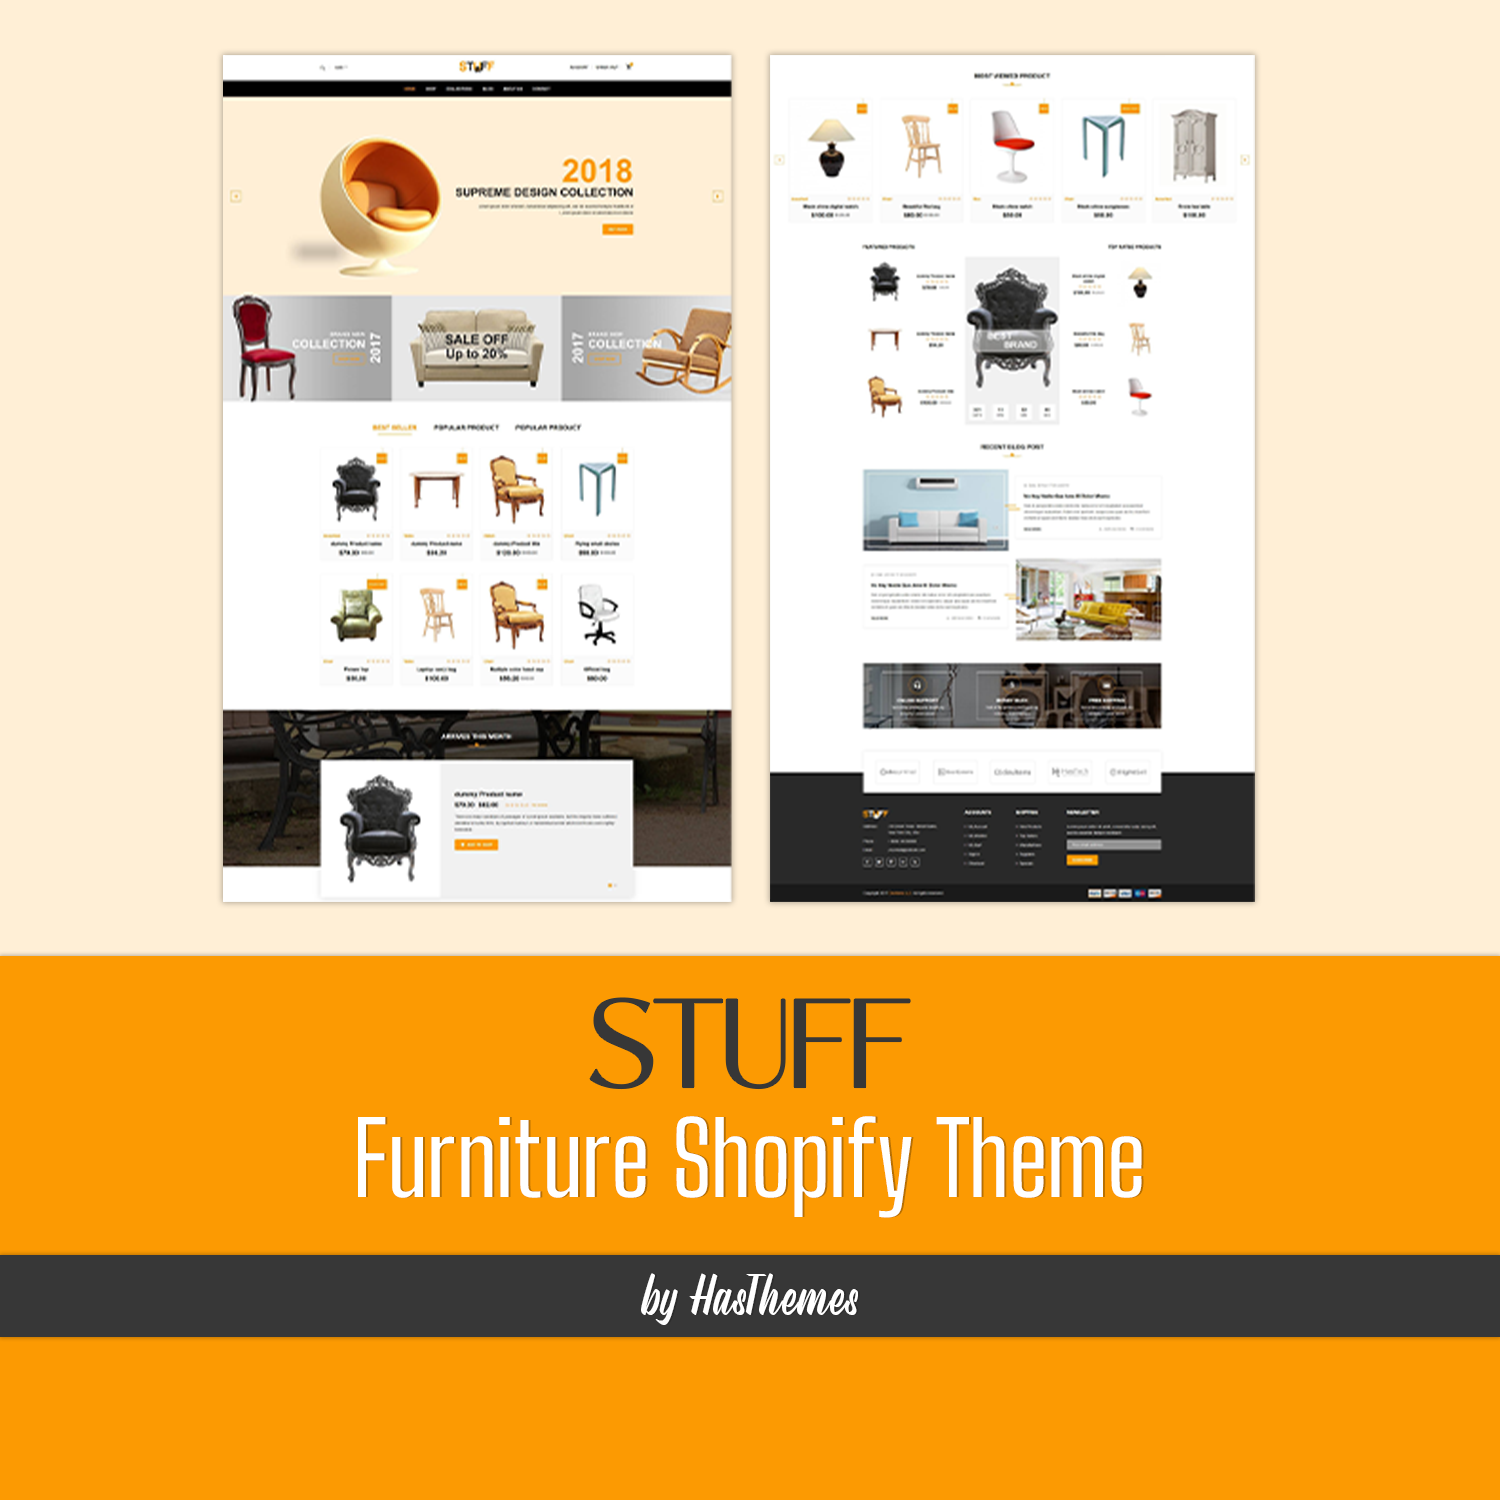 Illustration furniture shopify theme stuff.